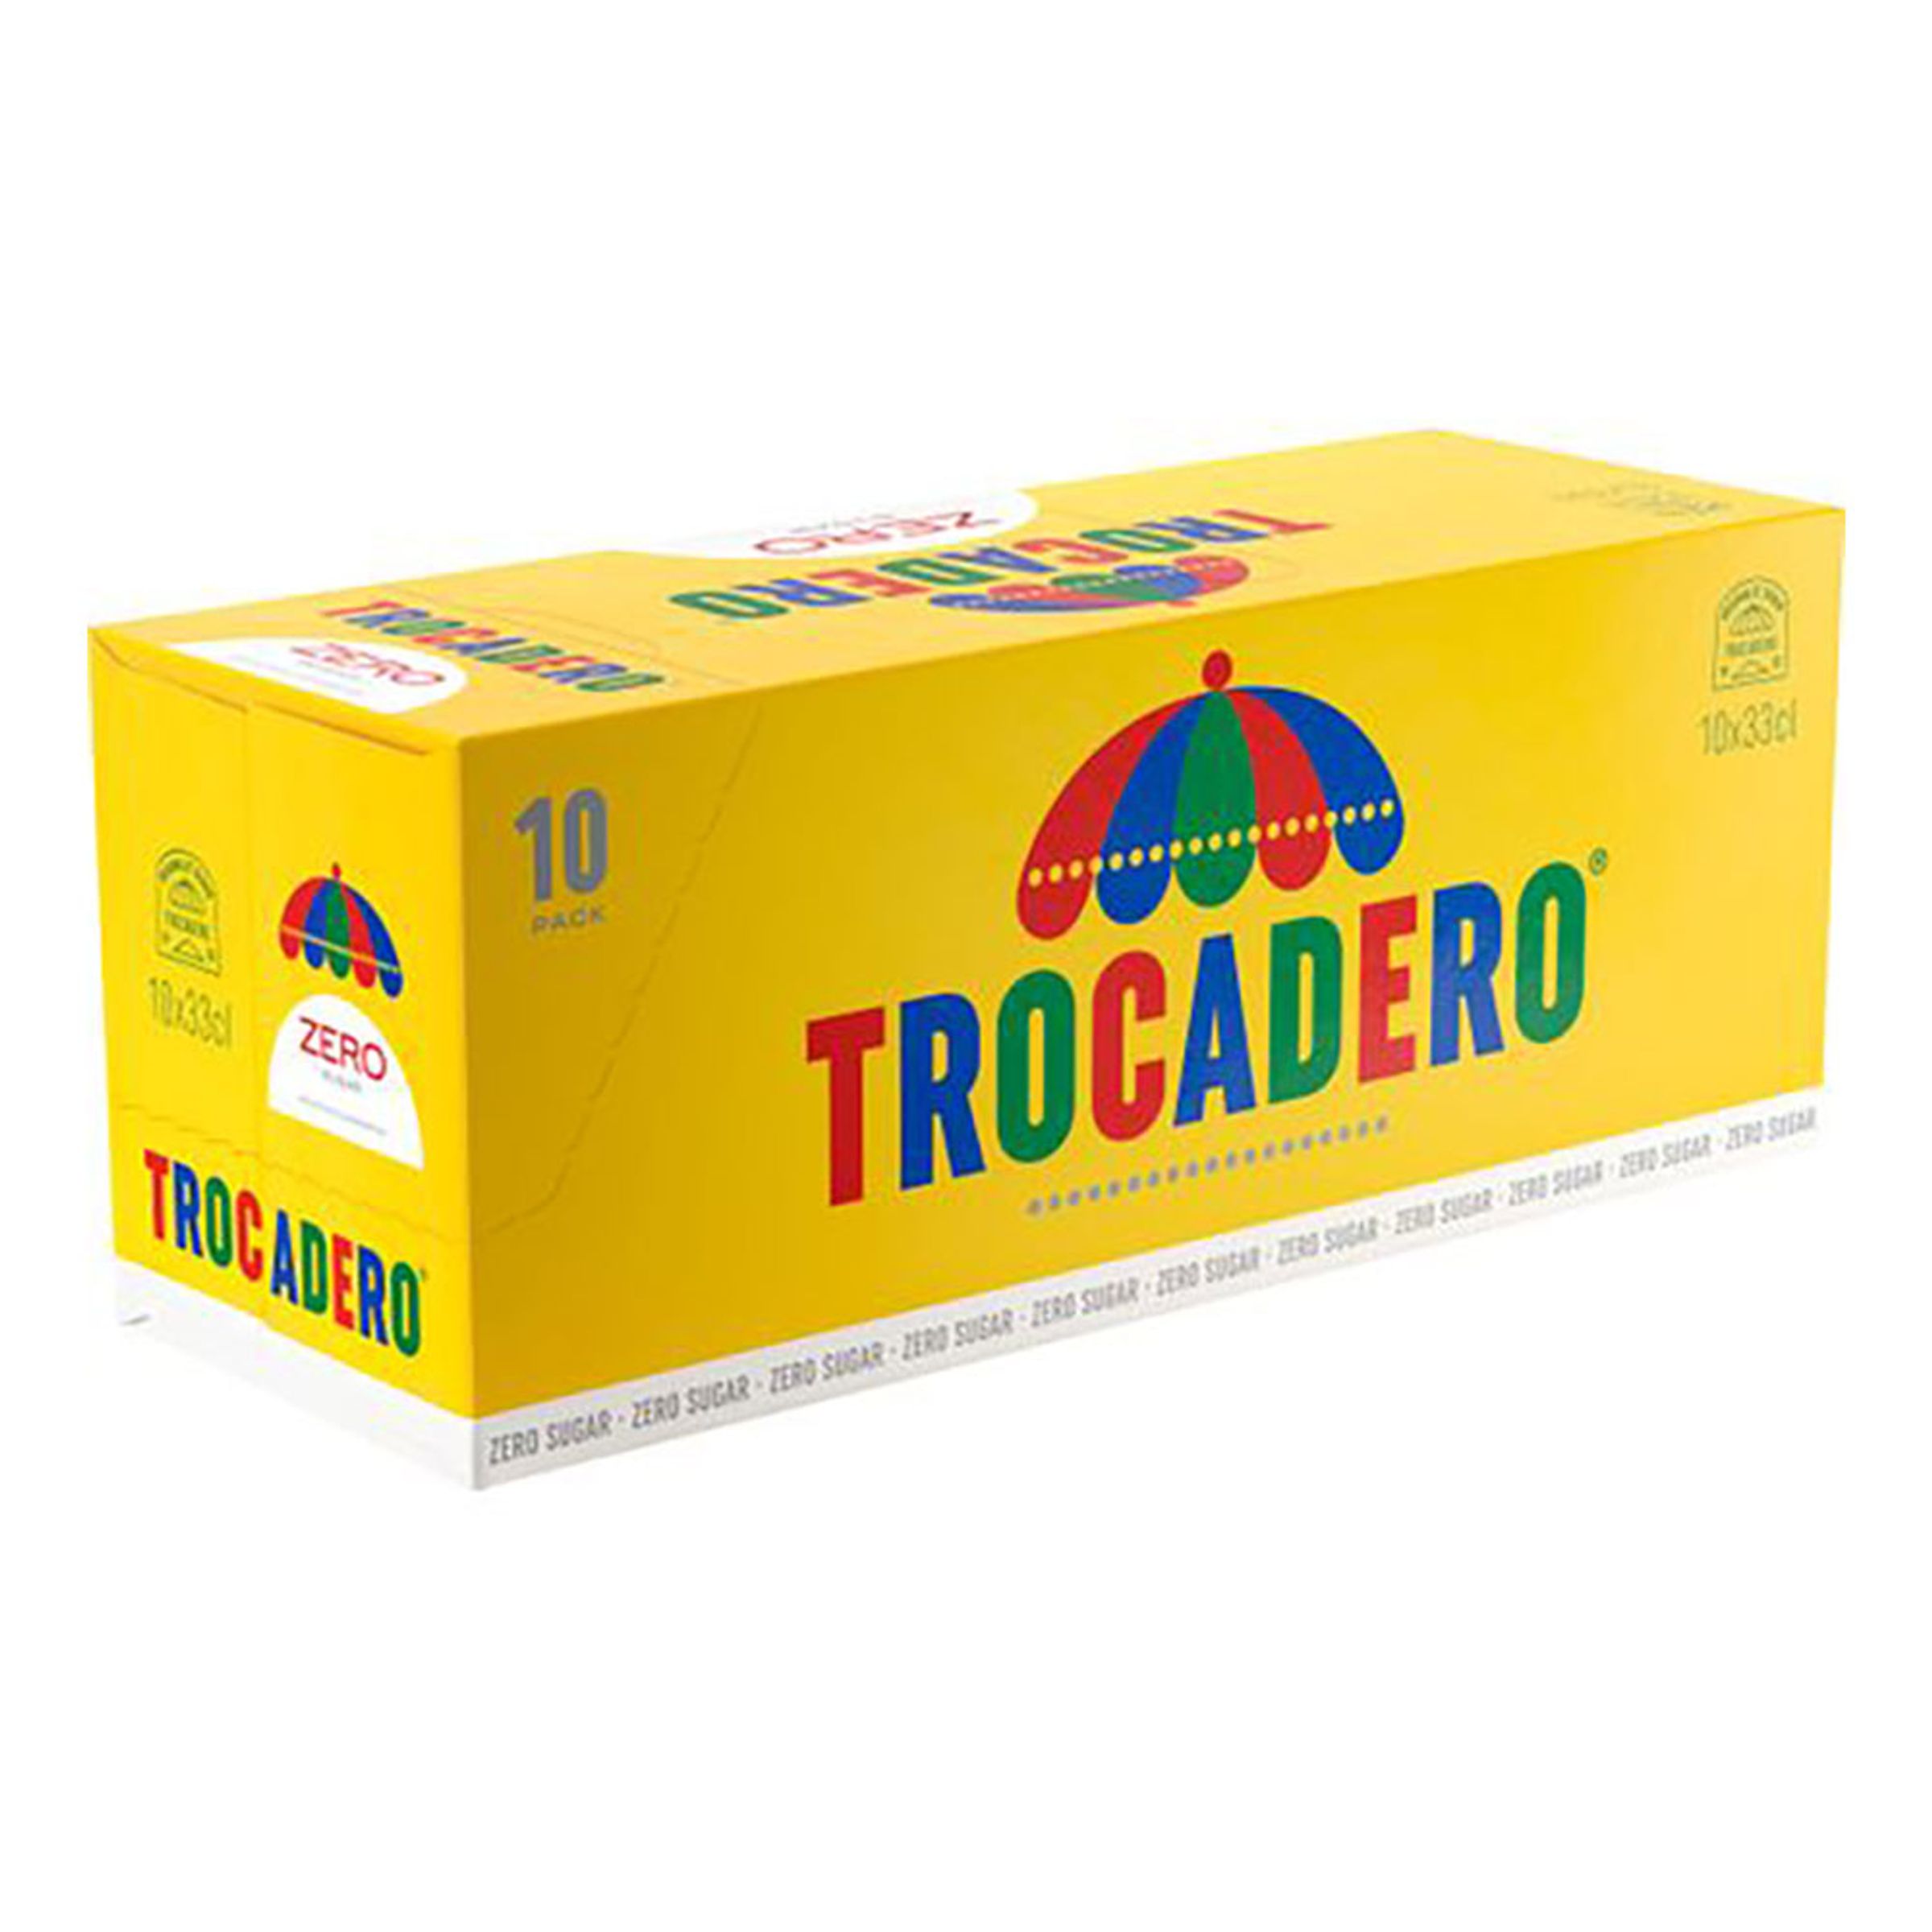 Trocadero Zero Fridge Mate - 10-pack